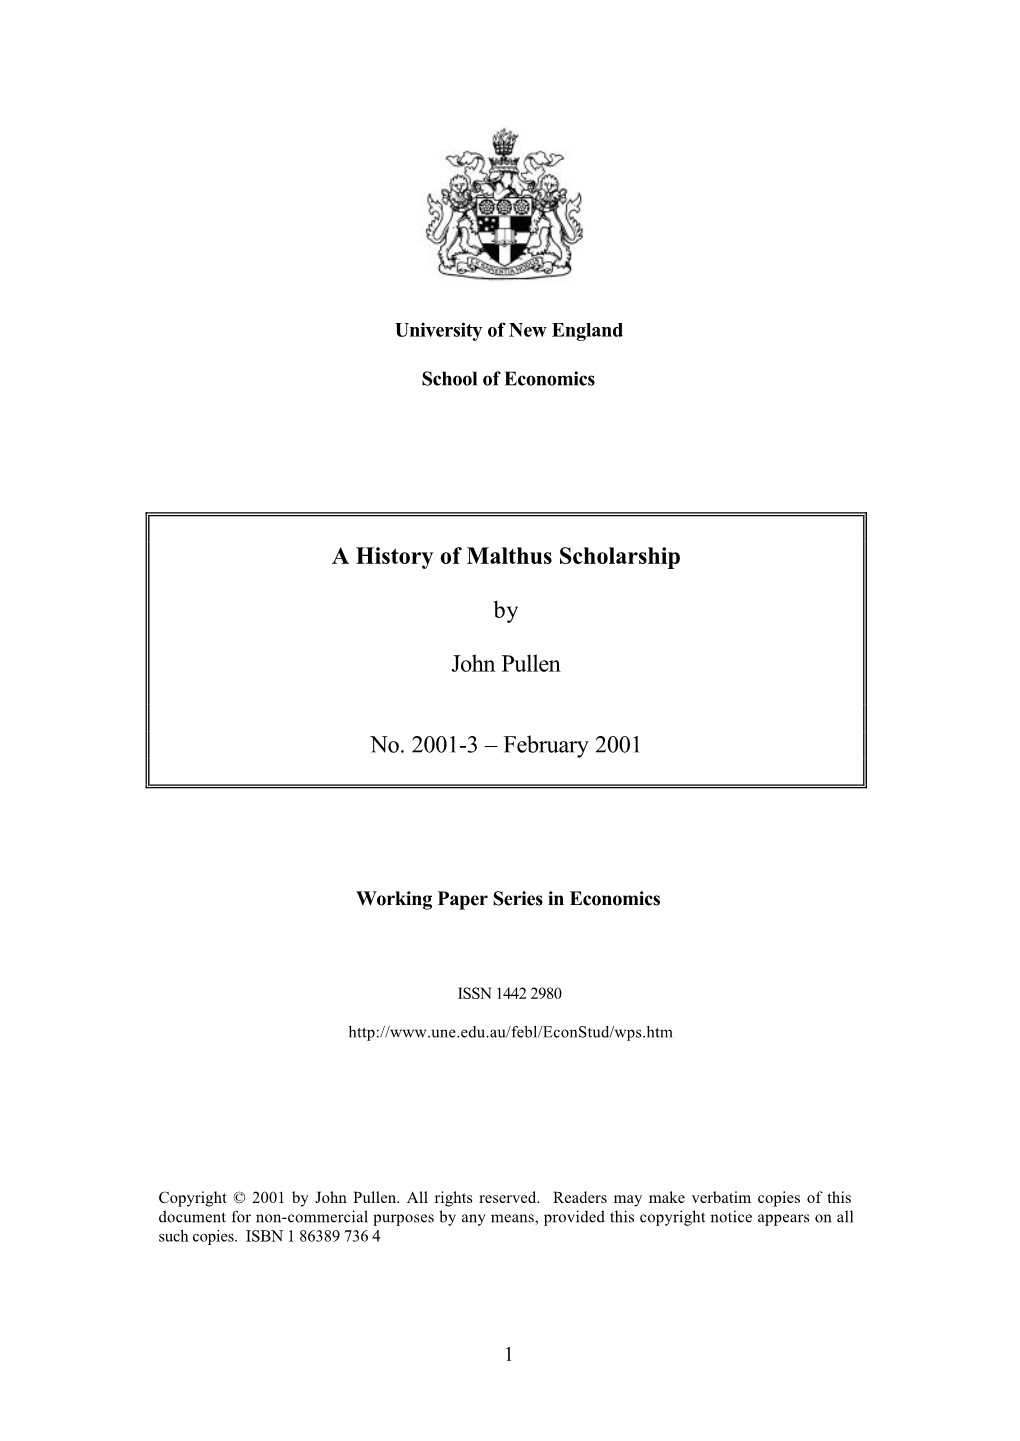 A History of Malthus Scholarship by John Pullen No. 2001-3